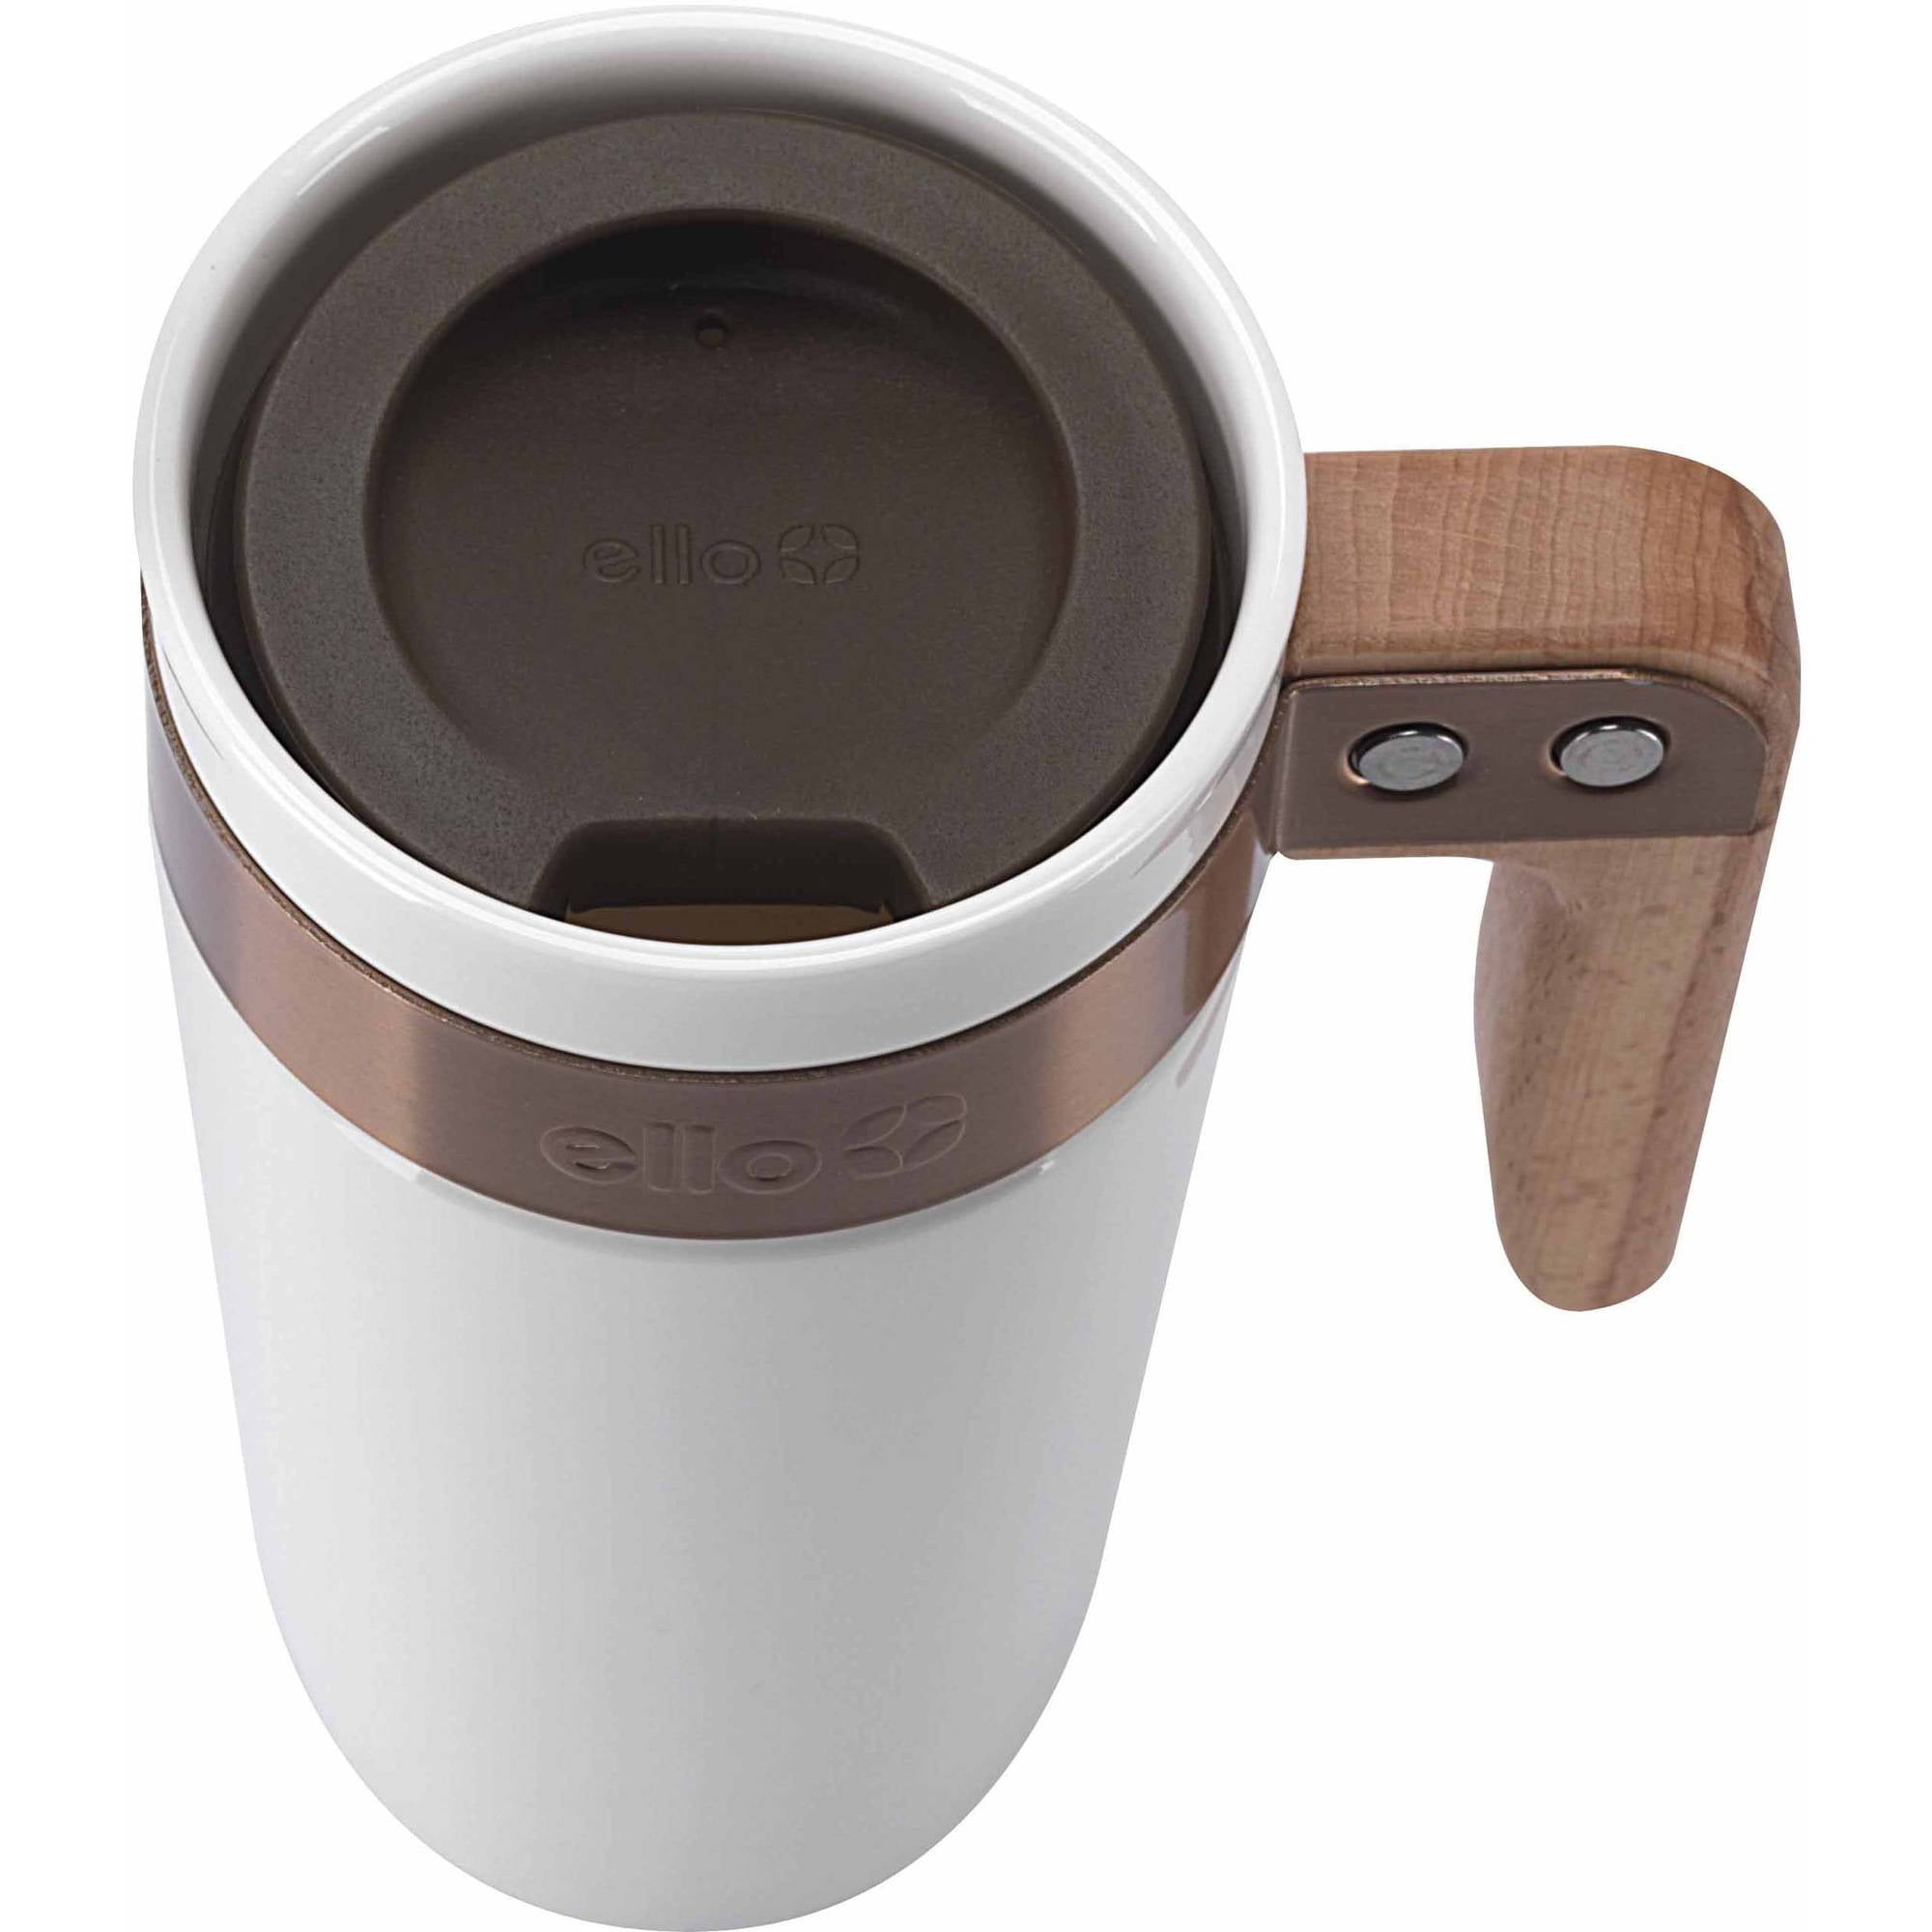 Ello Ceramic Travel Mug Wooden Handle White Coffee-Tea-Water